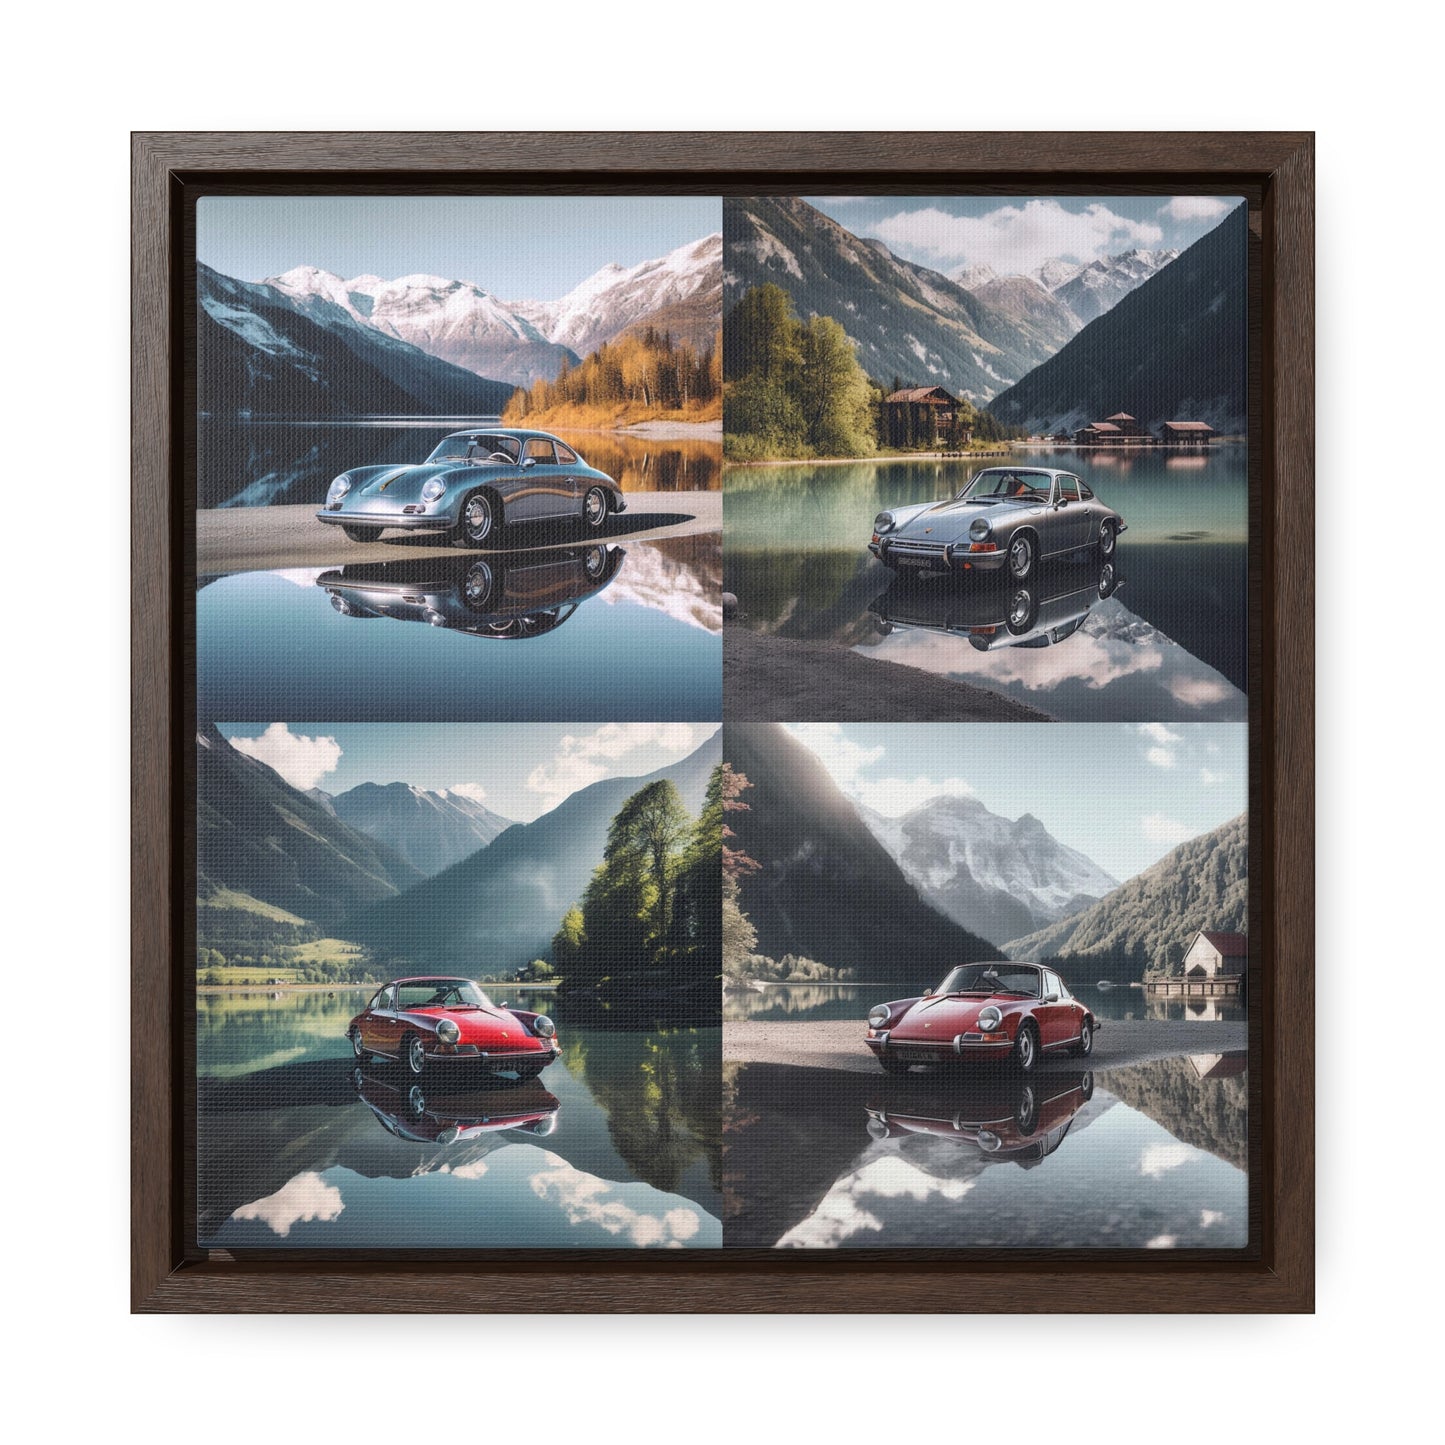 Gallery Canvas Wraps, Square Frame Porsche Lake 5